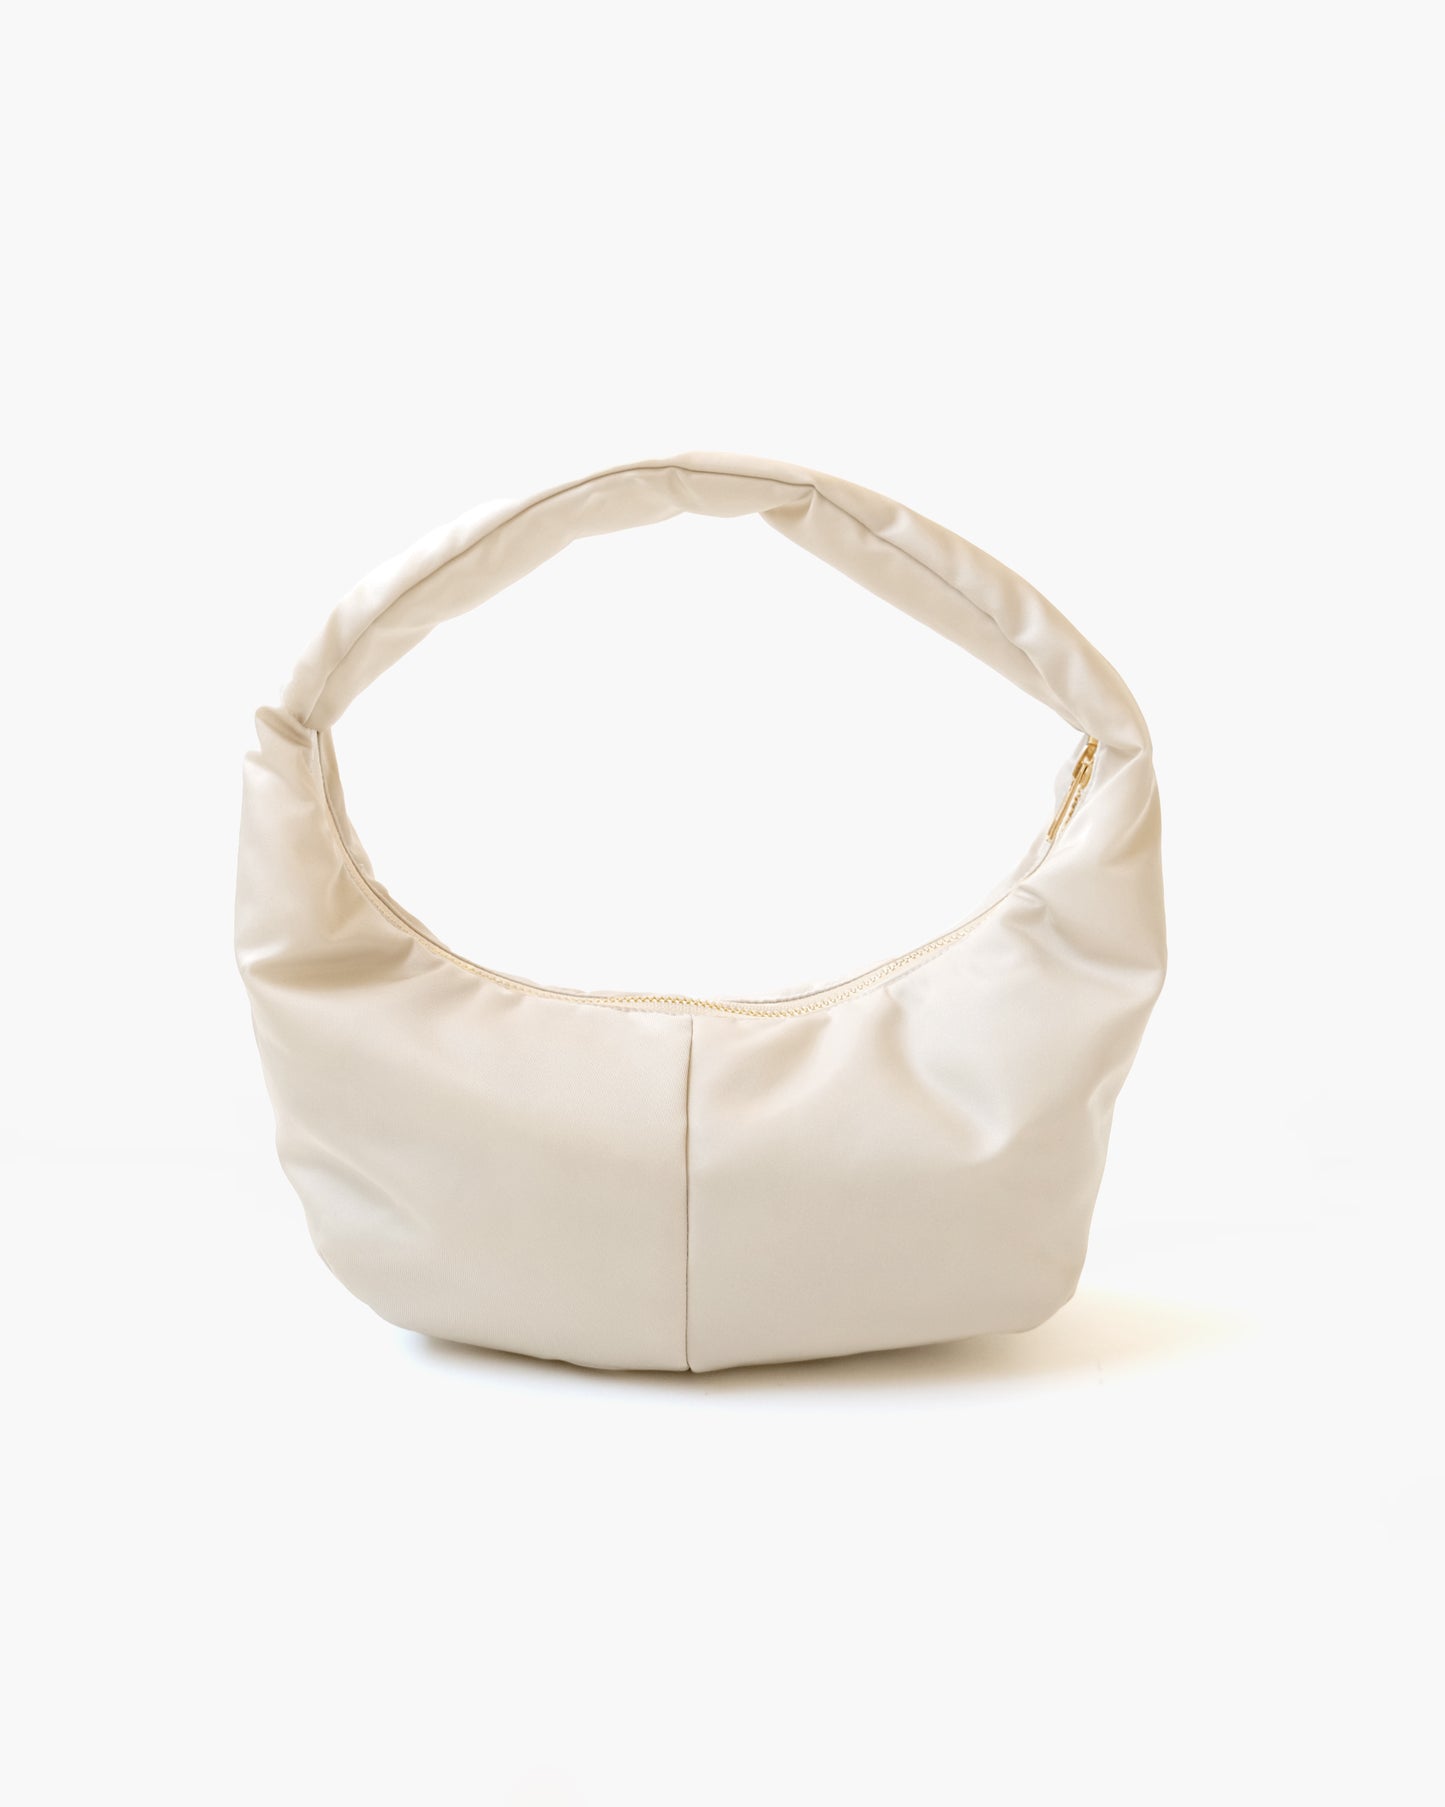 404 Padding Hand Bag - Ivory